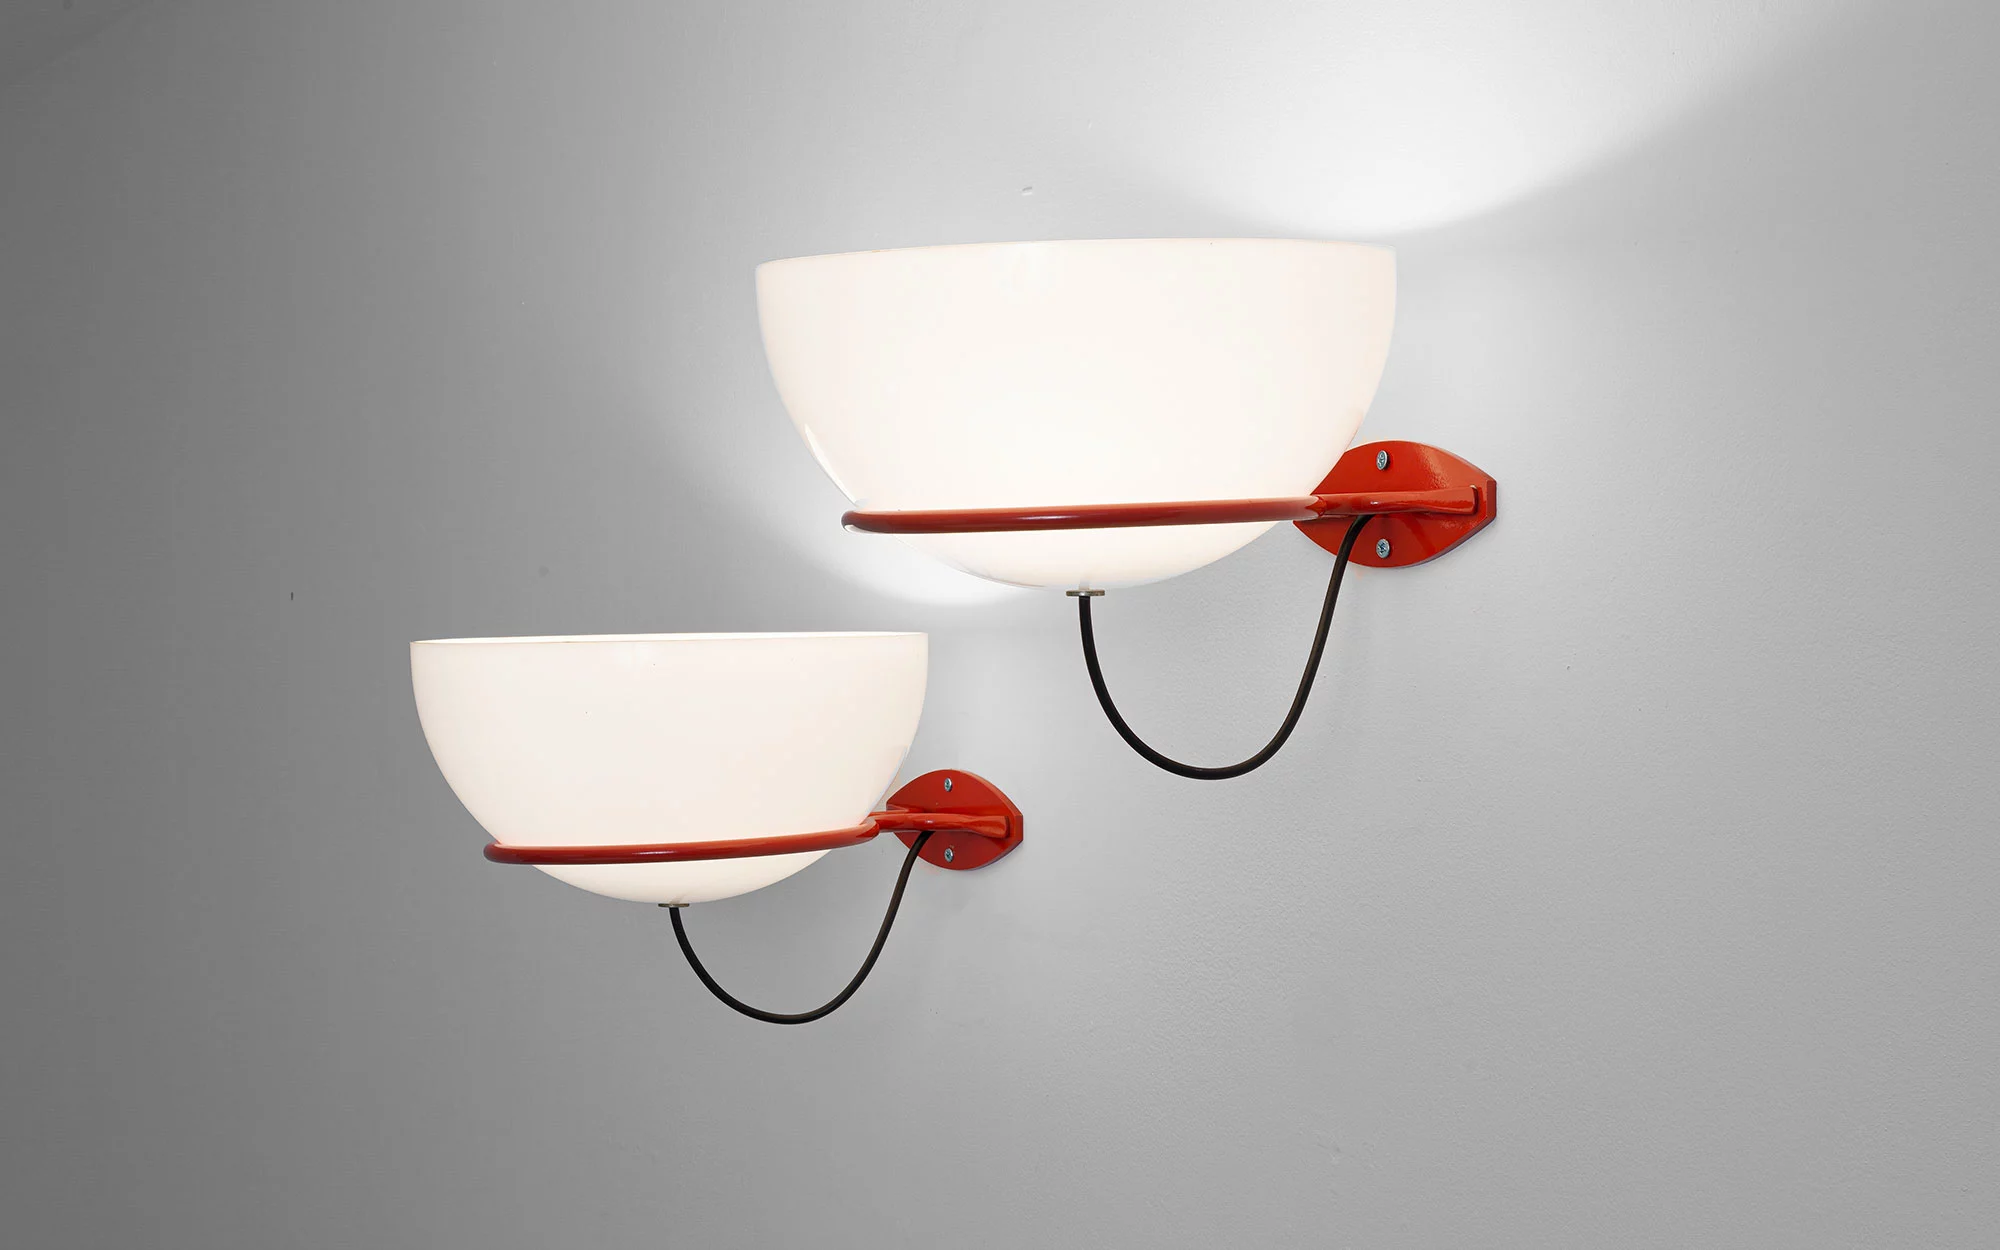 2/2 PX (red) - Gino Sarfatti - wall-light - Galerie kreo